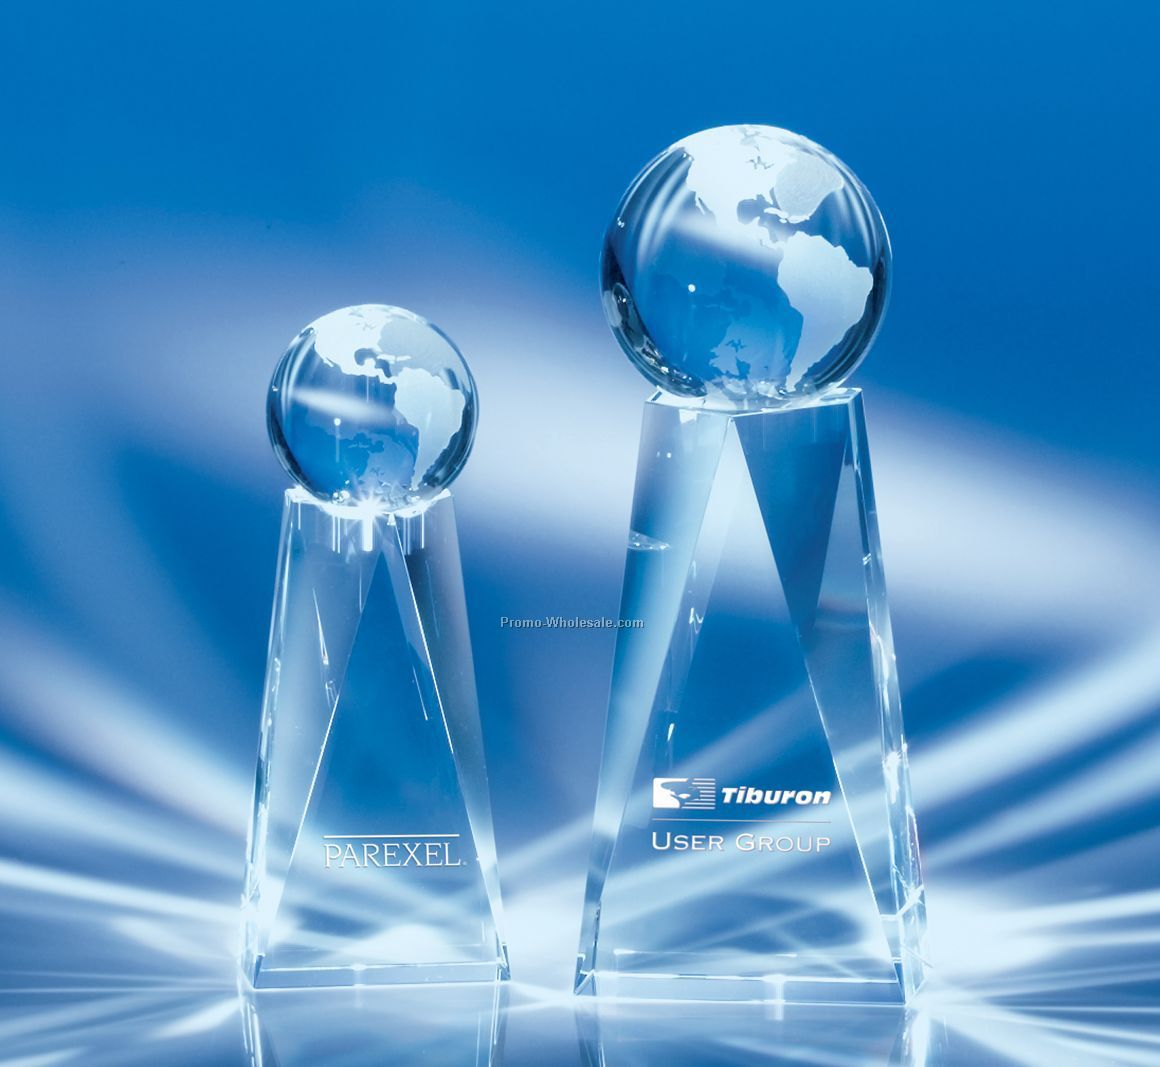 3"x9-1/2"x 2-1/4" Exposure Crystal Globe Award